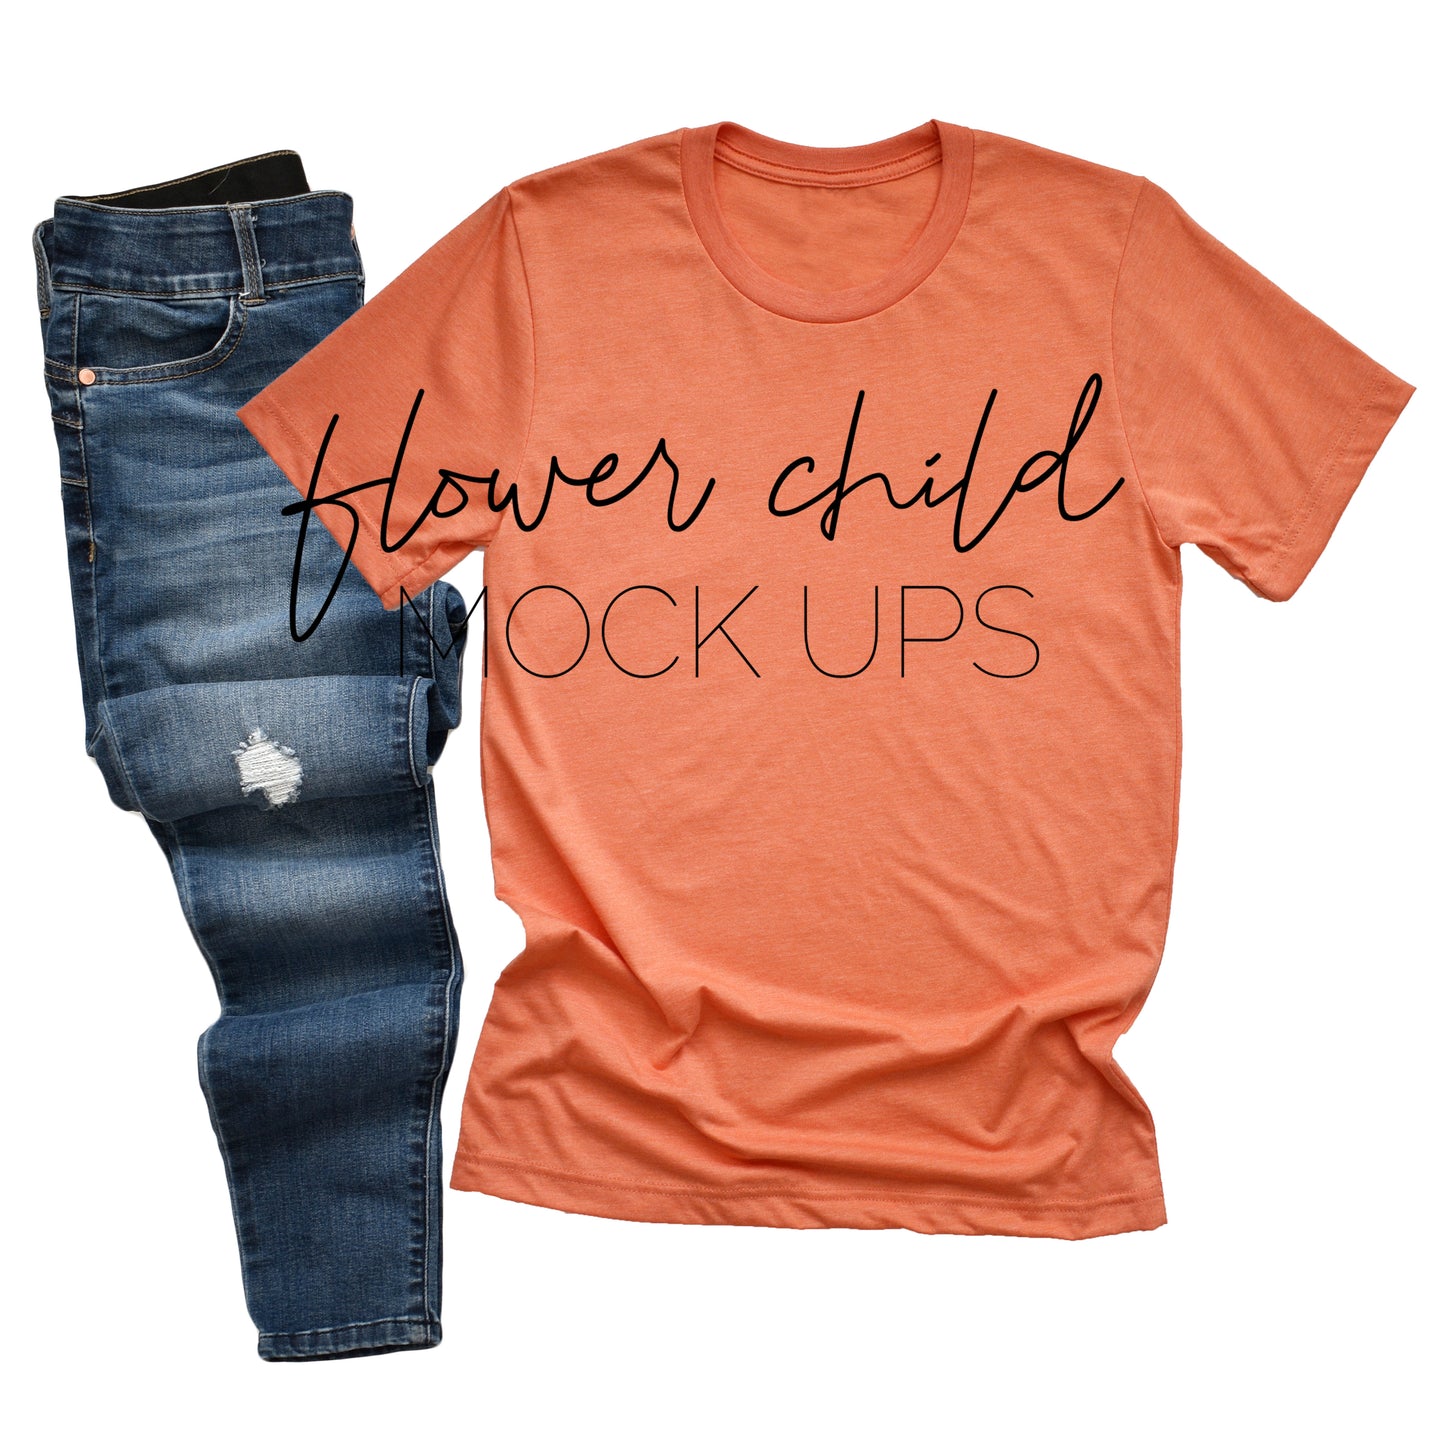 3001 Heather Orange Relaxed Jeans - flowerchildmockups